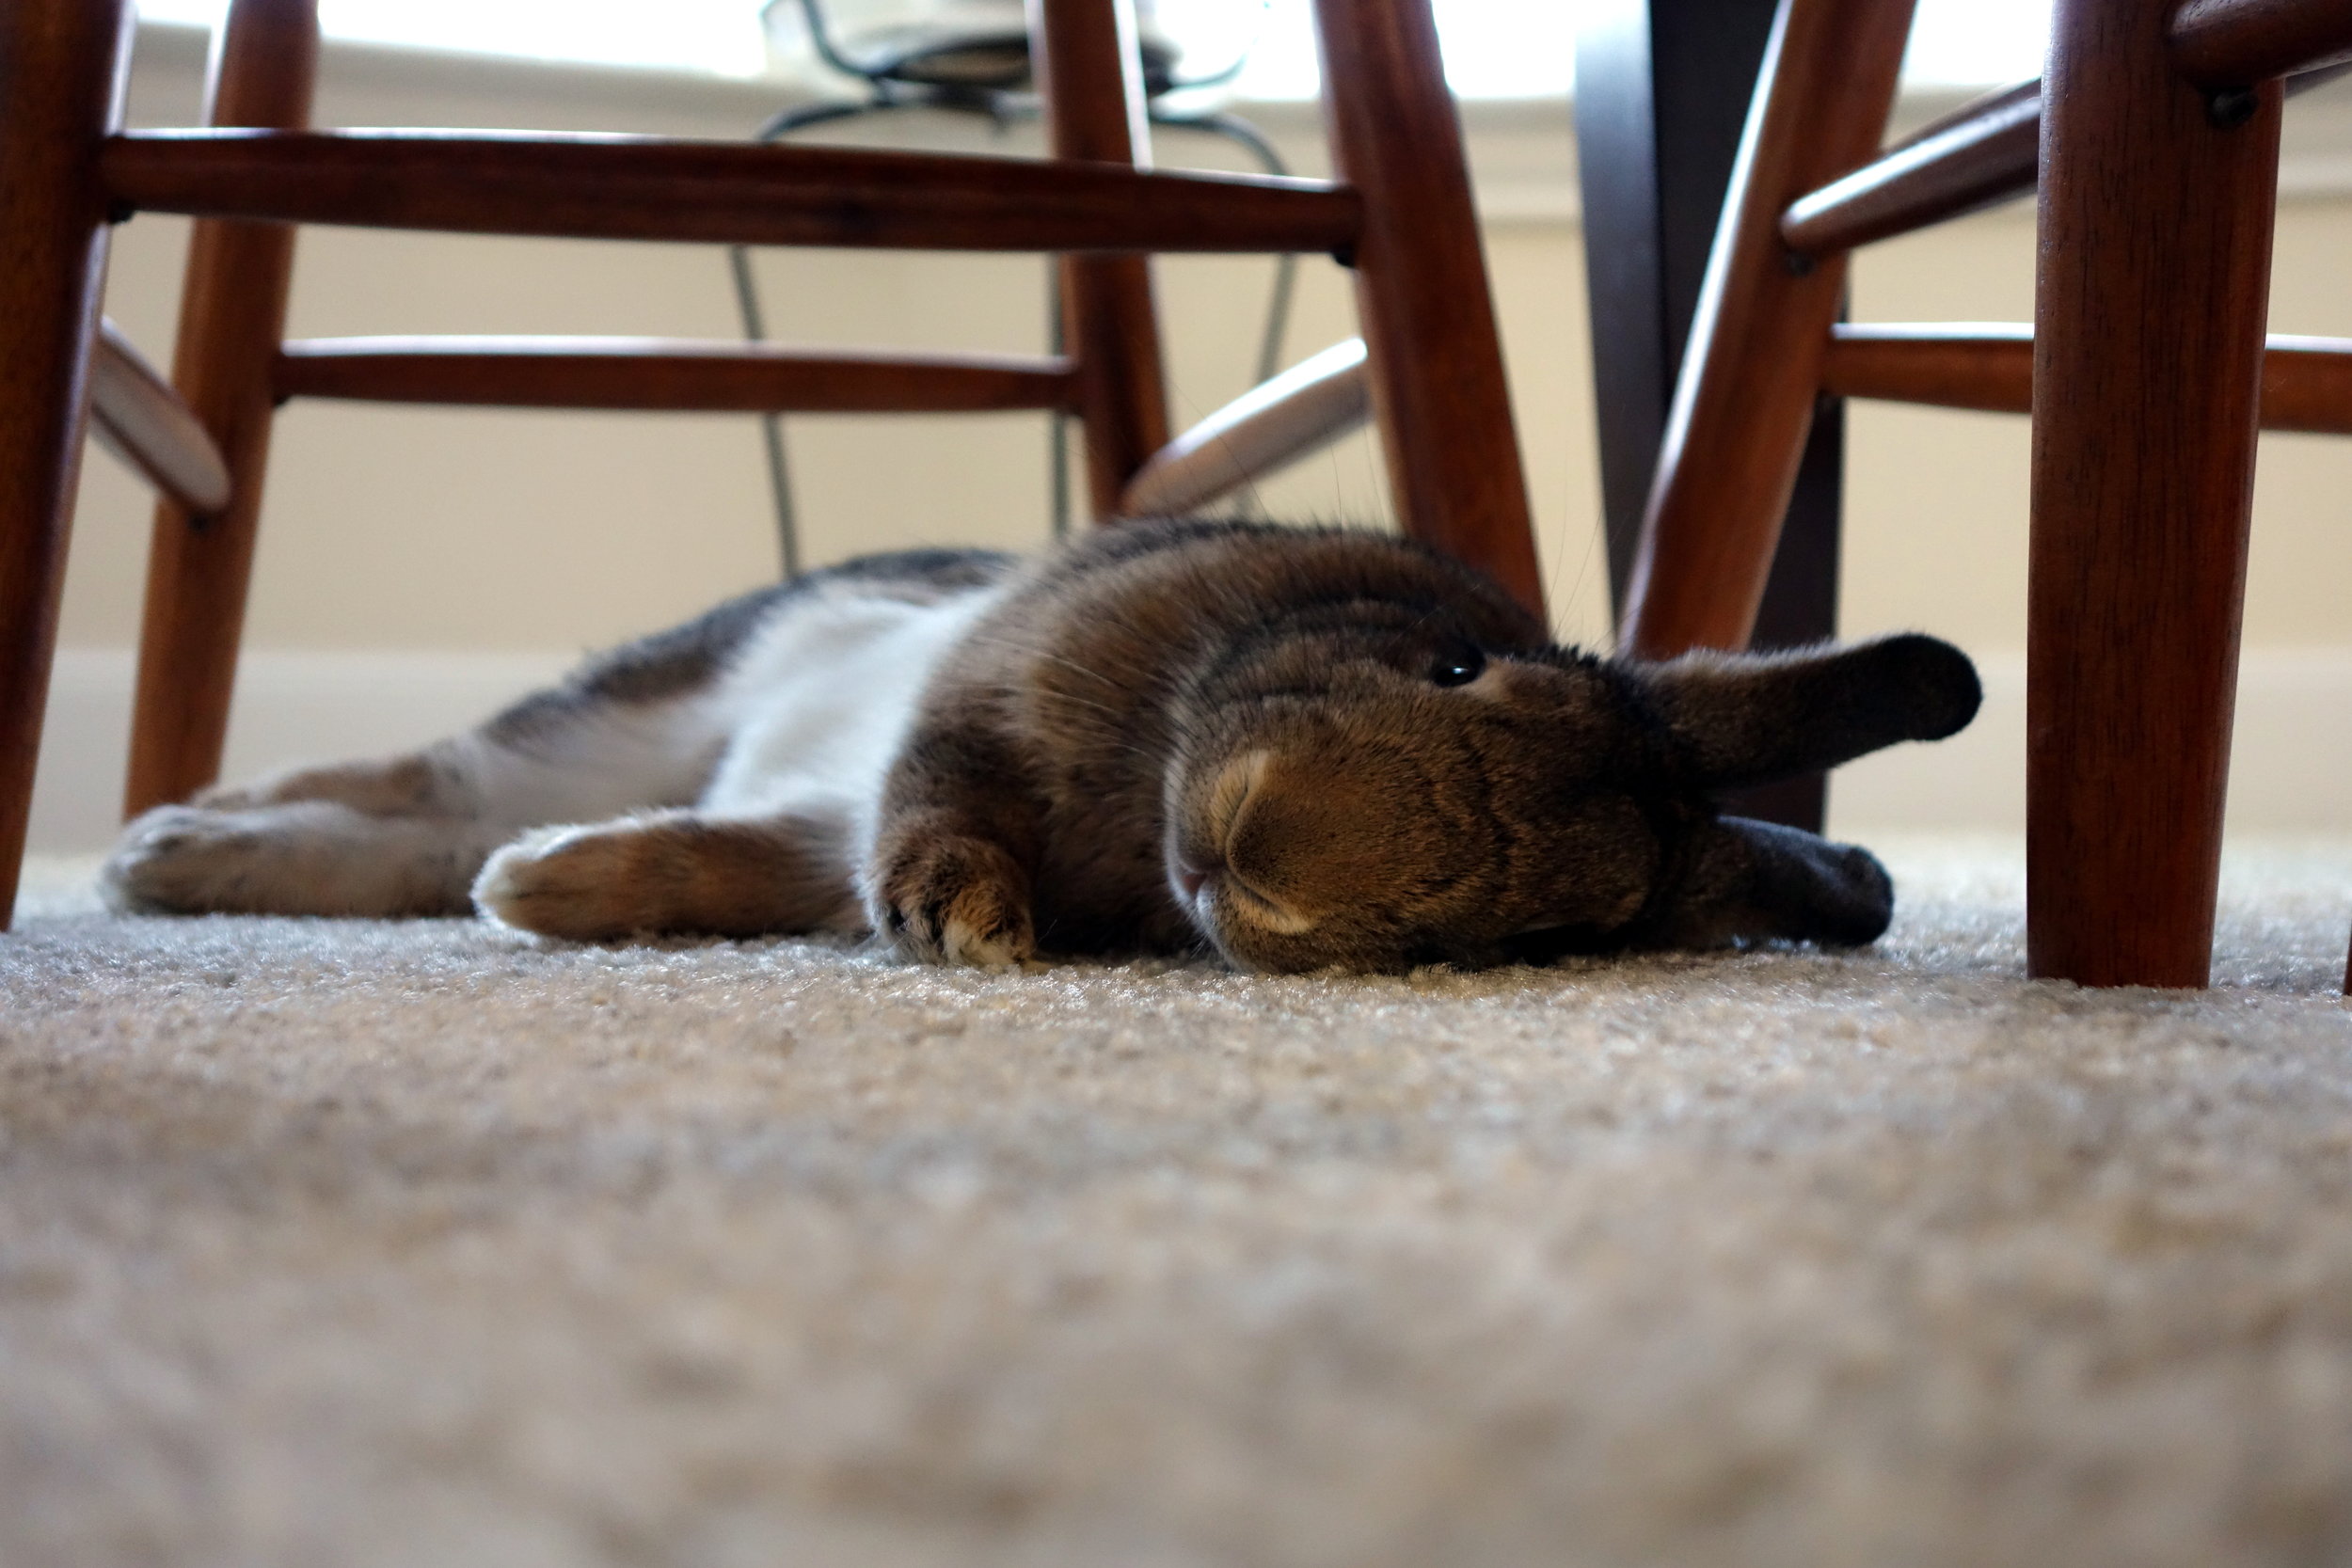 Sweet Photo of a Sleepy, Flopped Rabbit